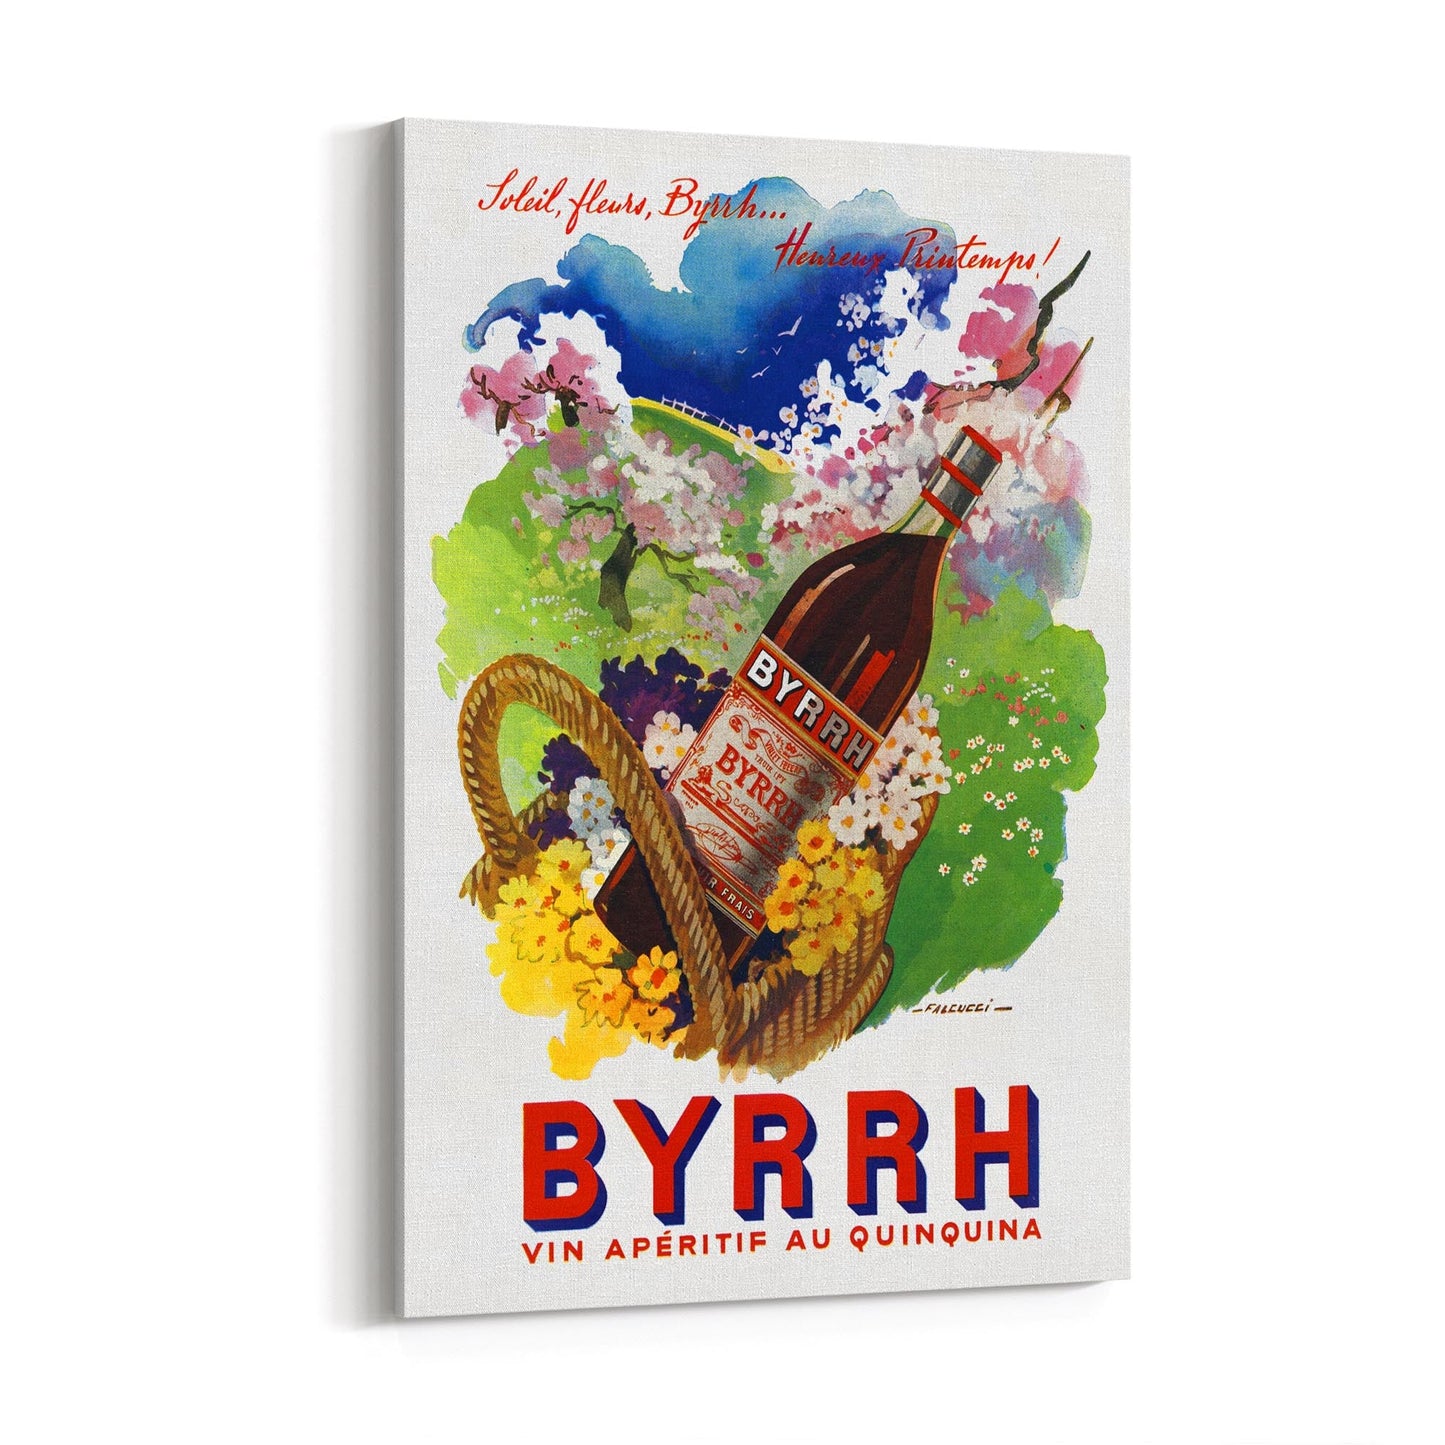 Spring Byrrh by Robert Falcucci | Framed Canvas Vintage Advertisement